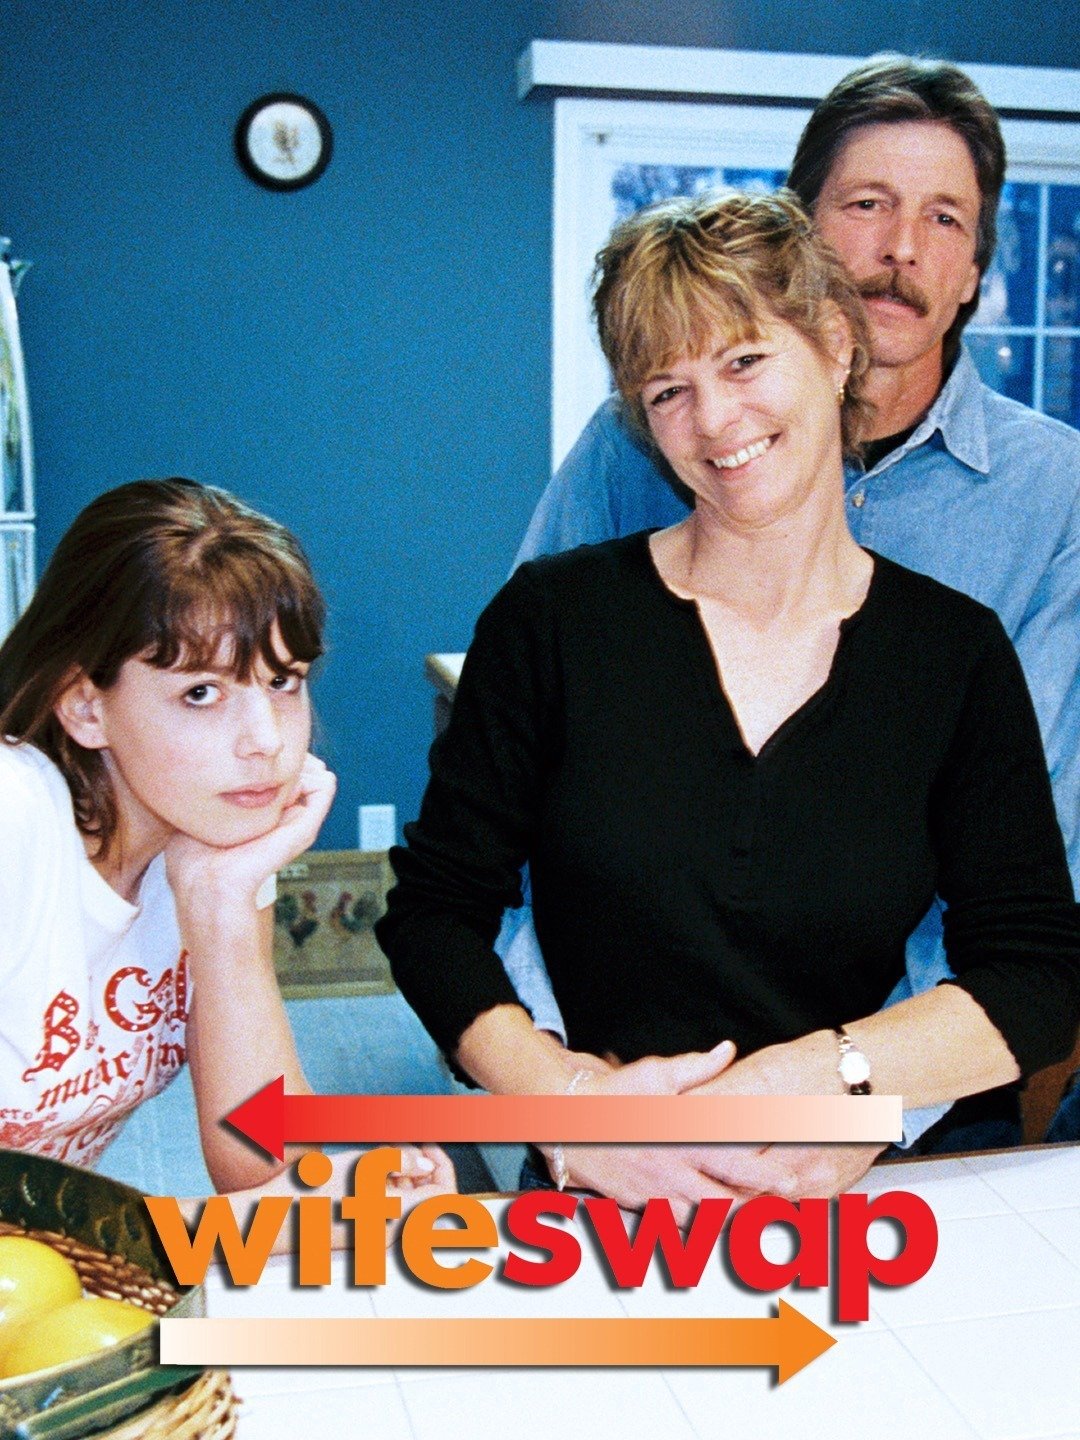 © 2004 ABC, INC.Wife Swap